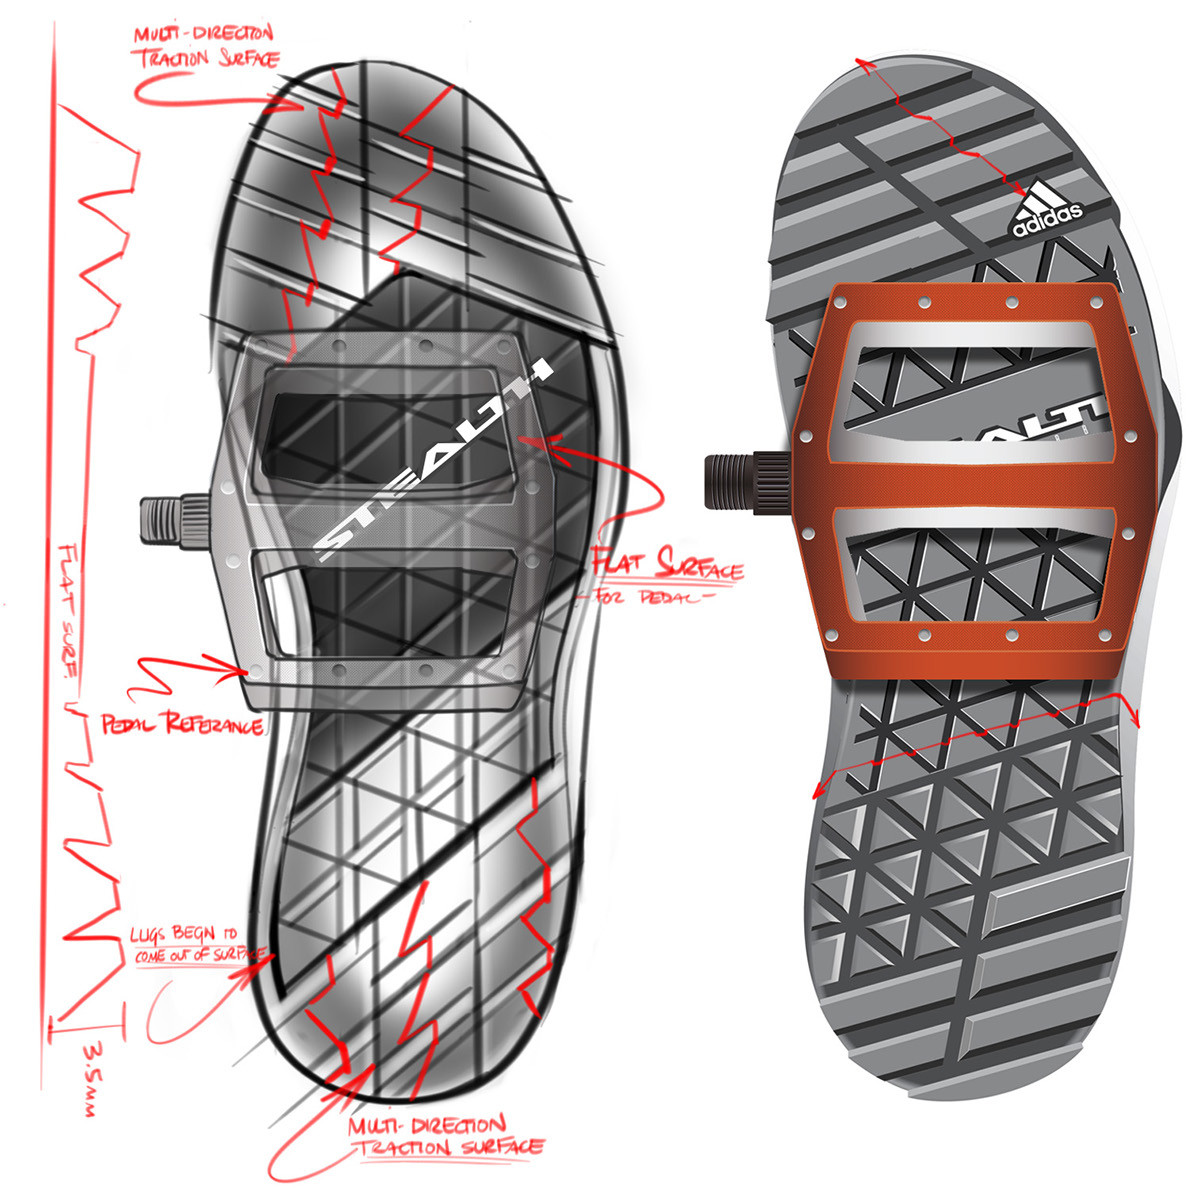 adidas Terrex footwear design